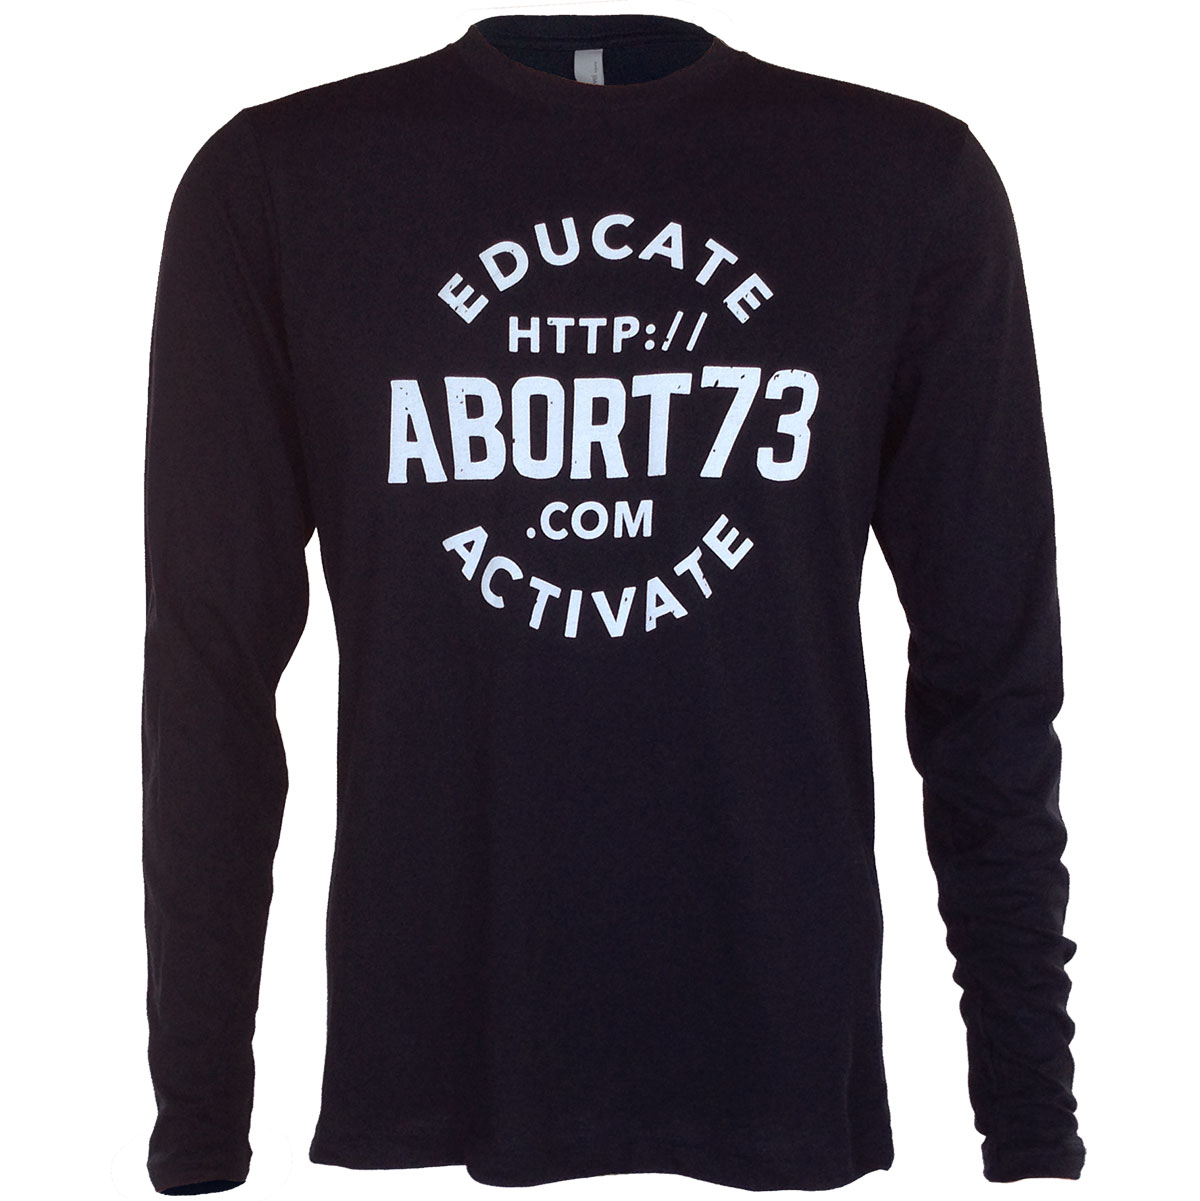 Educate. Activate. (Abort73 Unisex Long Sleeve T-shirt 3601)